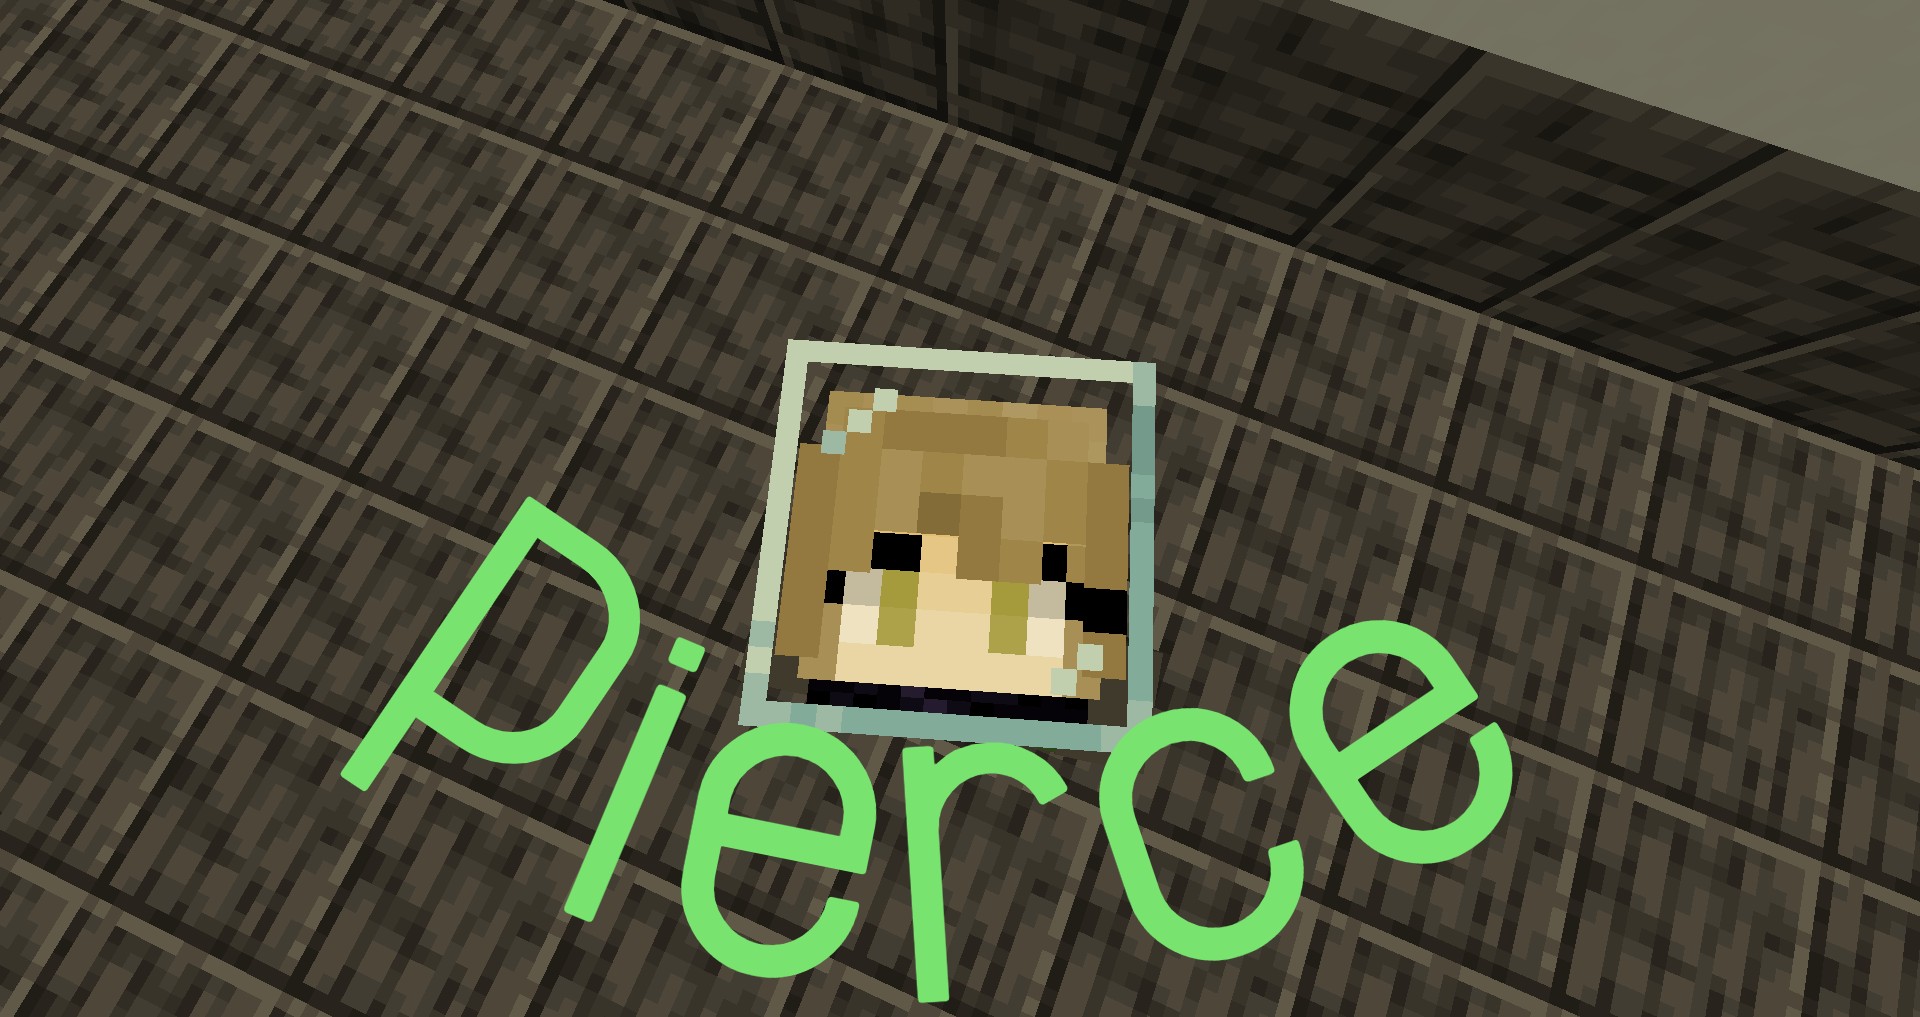 Tải về Pierce cho Minecraft 1.17.1